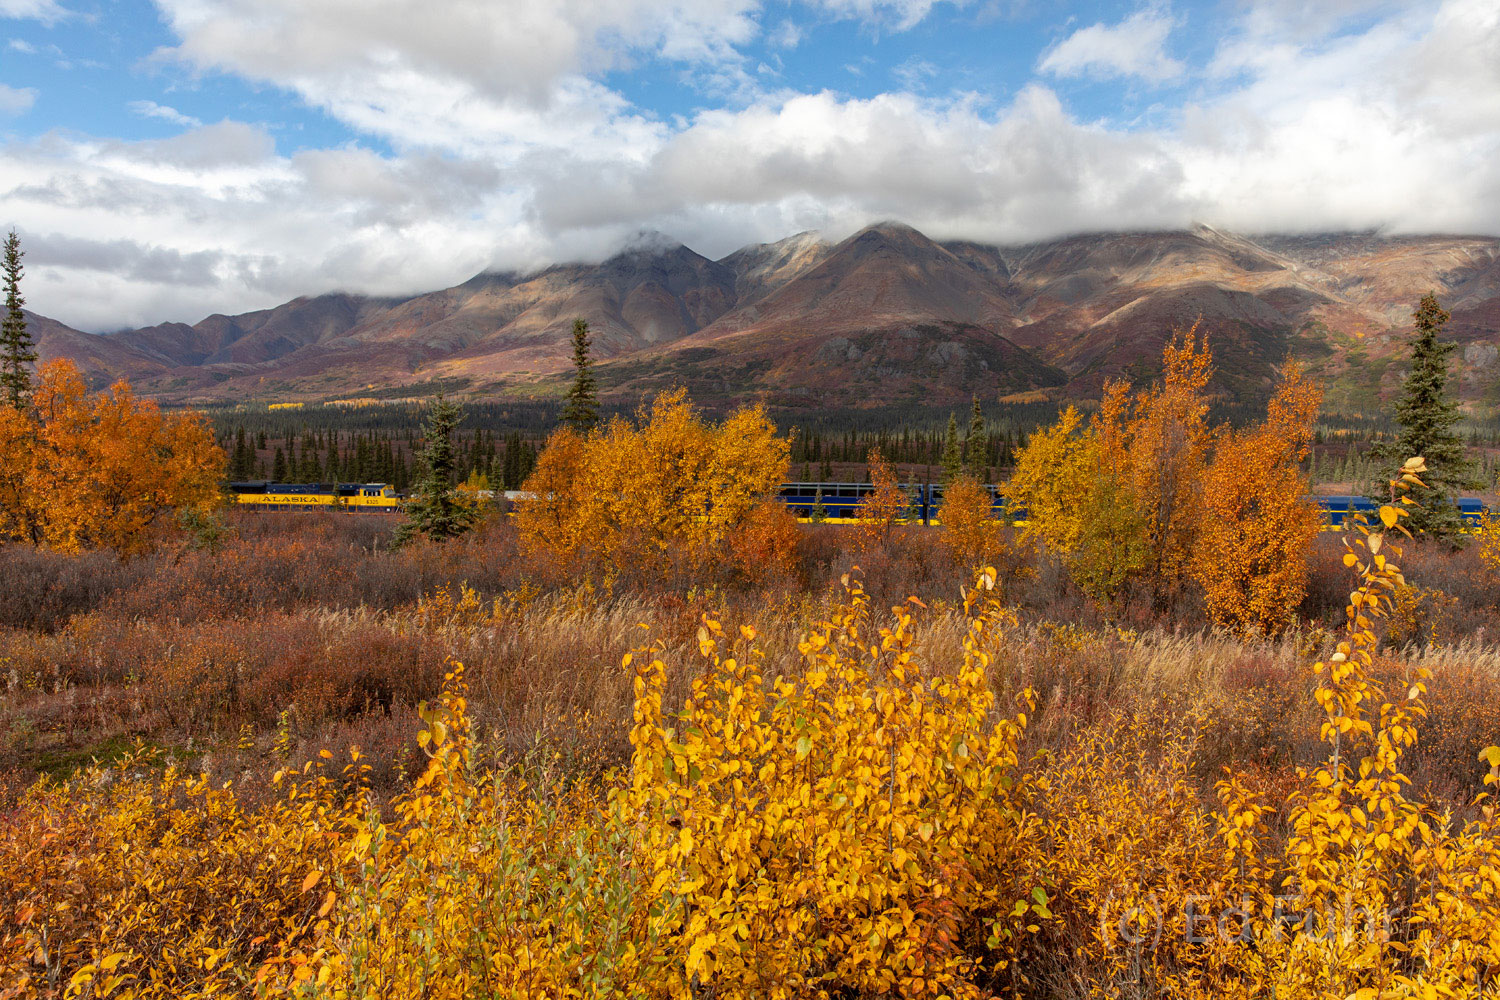 An Alaskan passenger train enters Denali in fall splendor